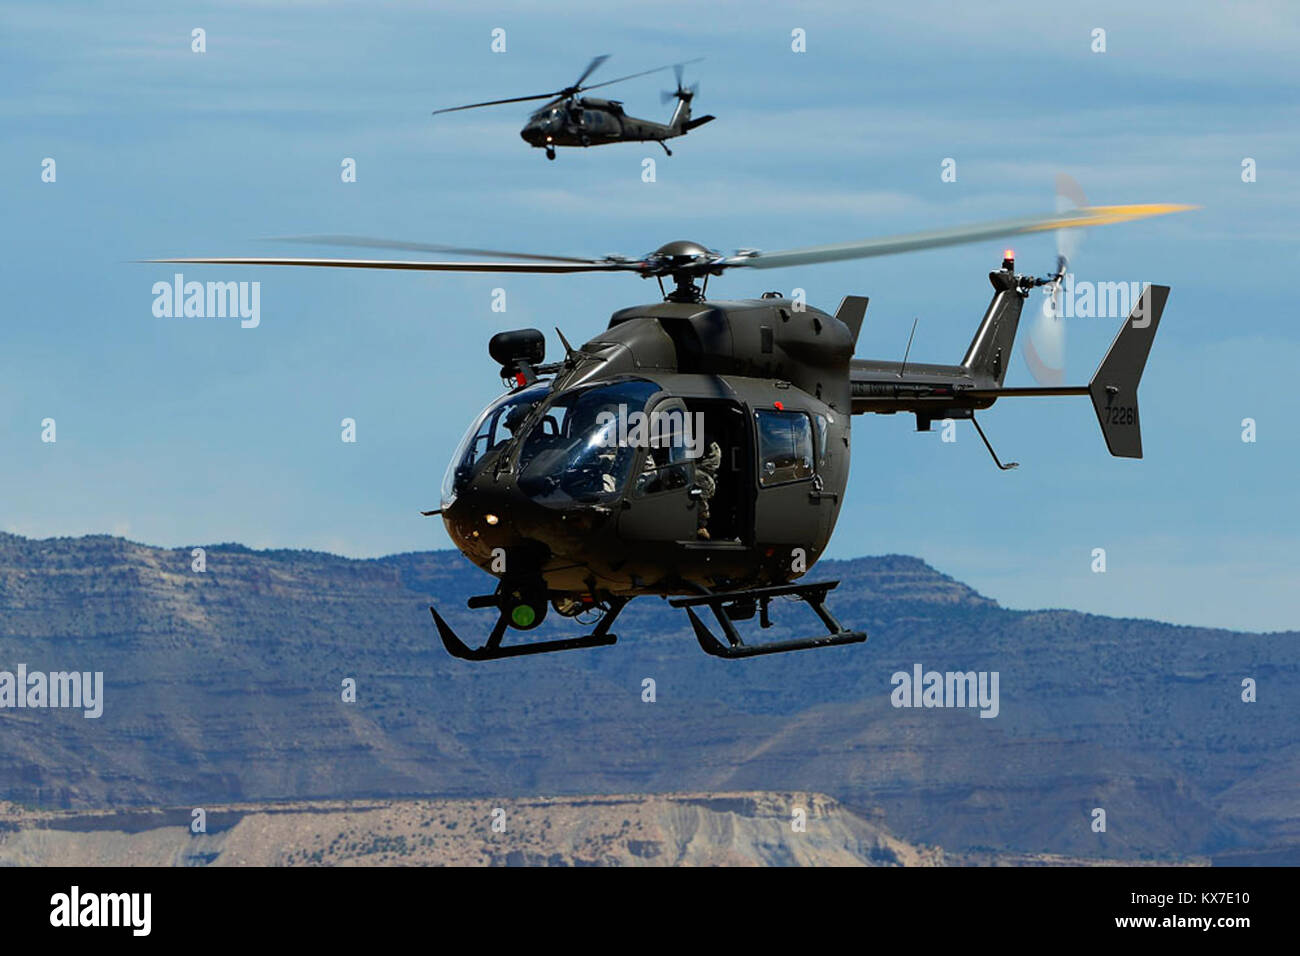 Американские военные вертолеты. Uh-72 Lakota. Airbus Helicopters uh-72a Lakota. Вертолет Lakota uh-72 ВВС США. Helicopters uh-72a США.